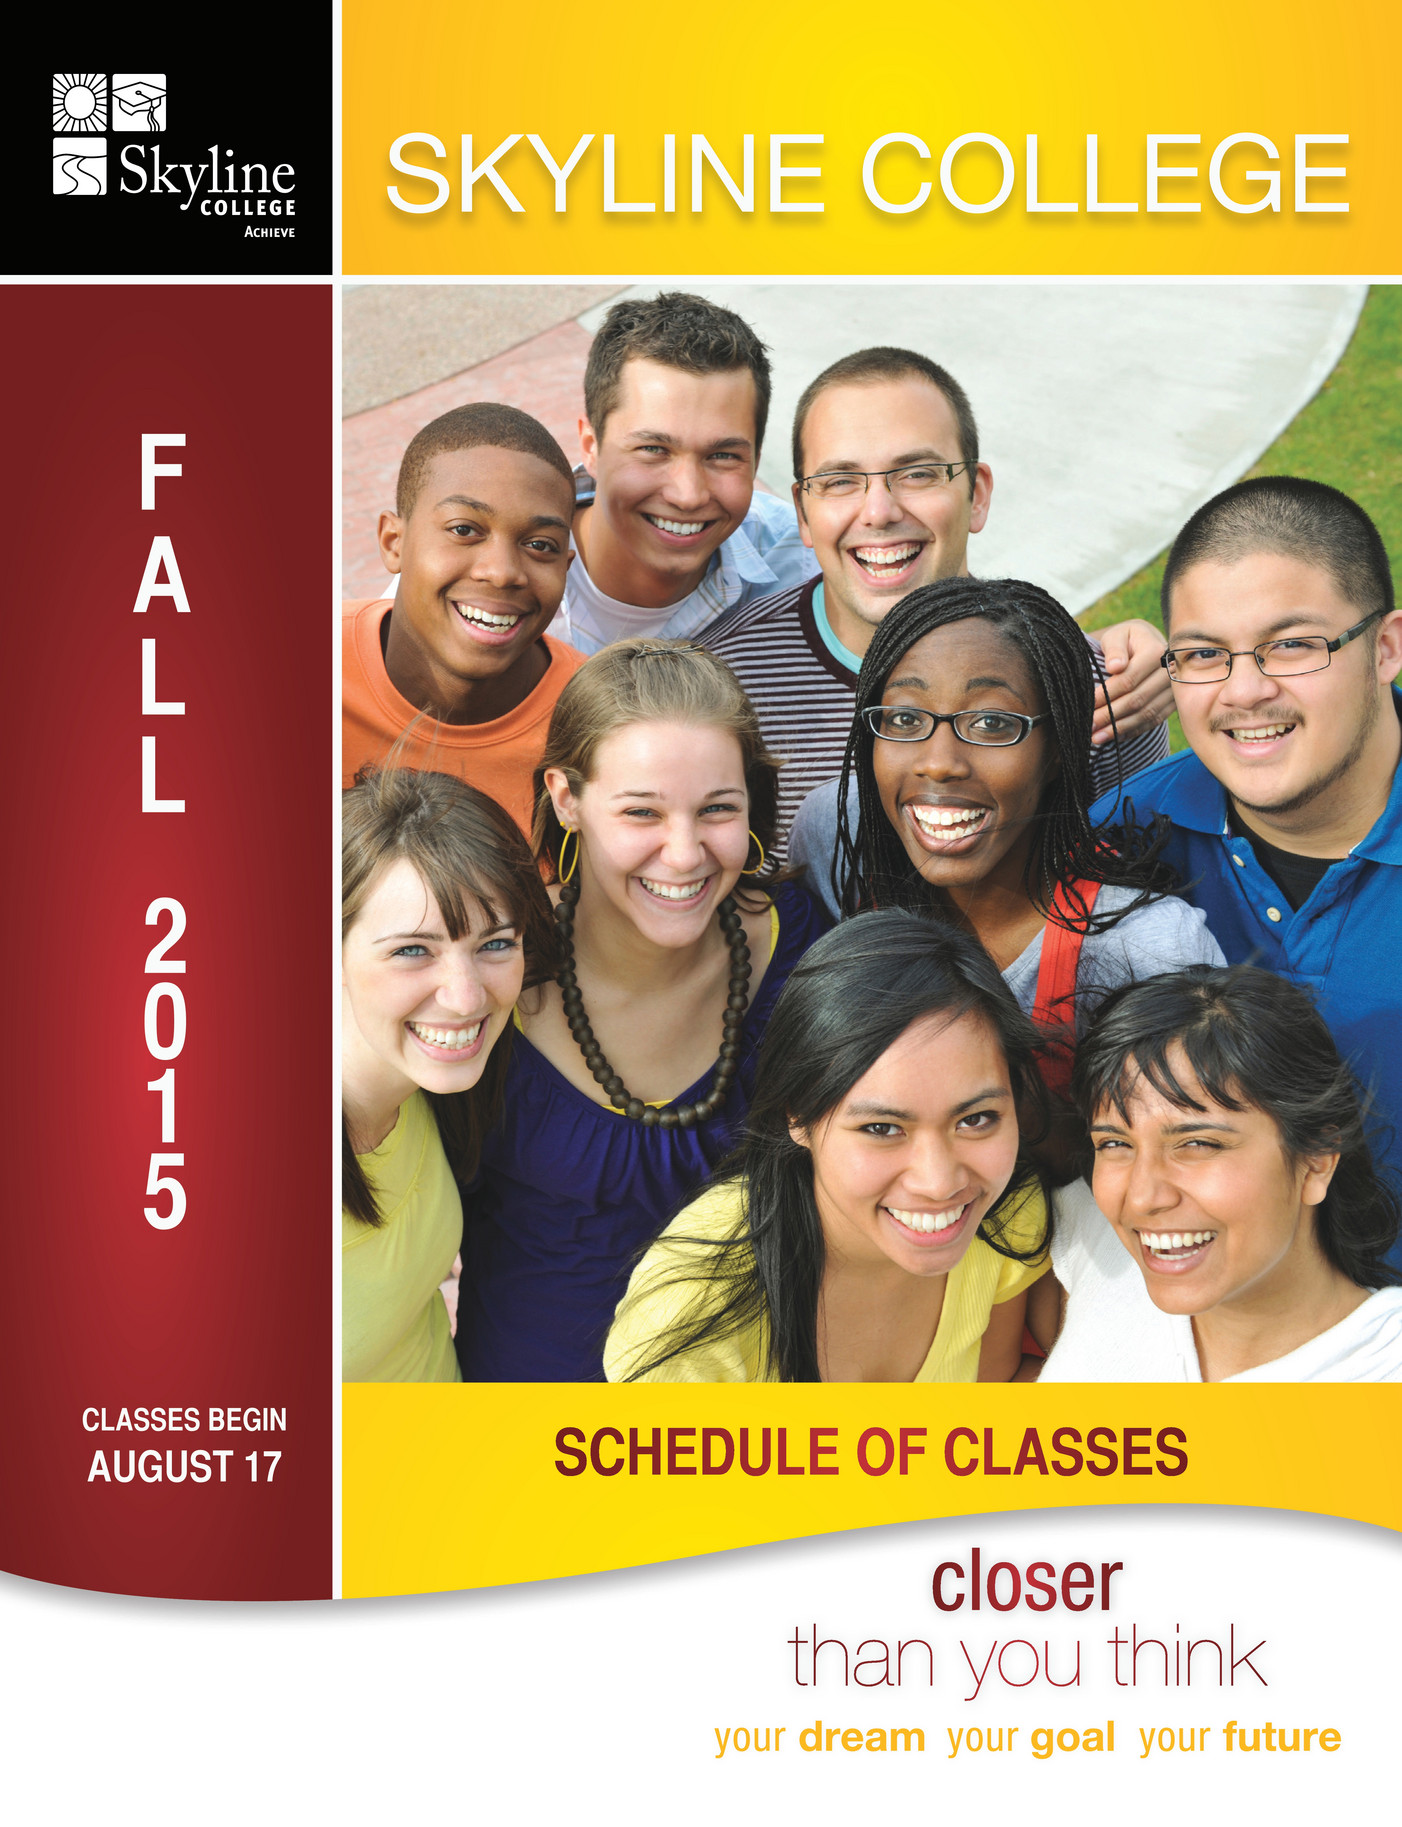 Skyline College - Skyline College 2015 Fall Schedule - Page 44-45